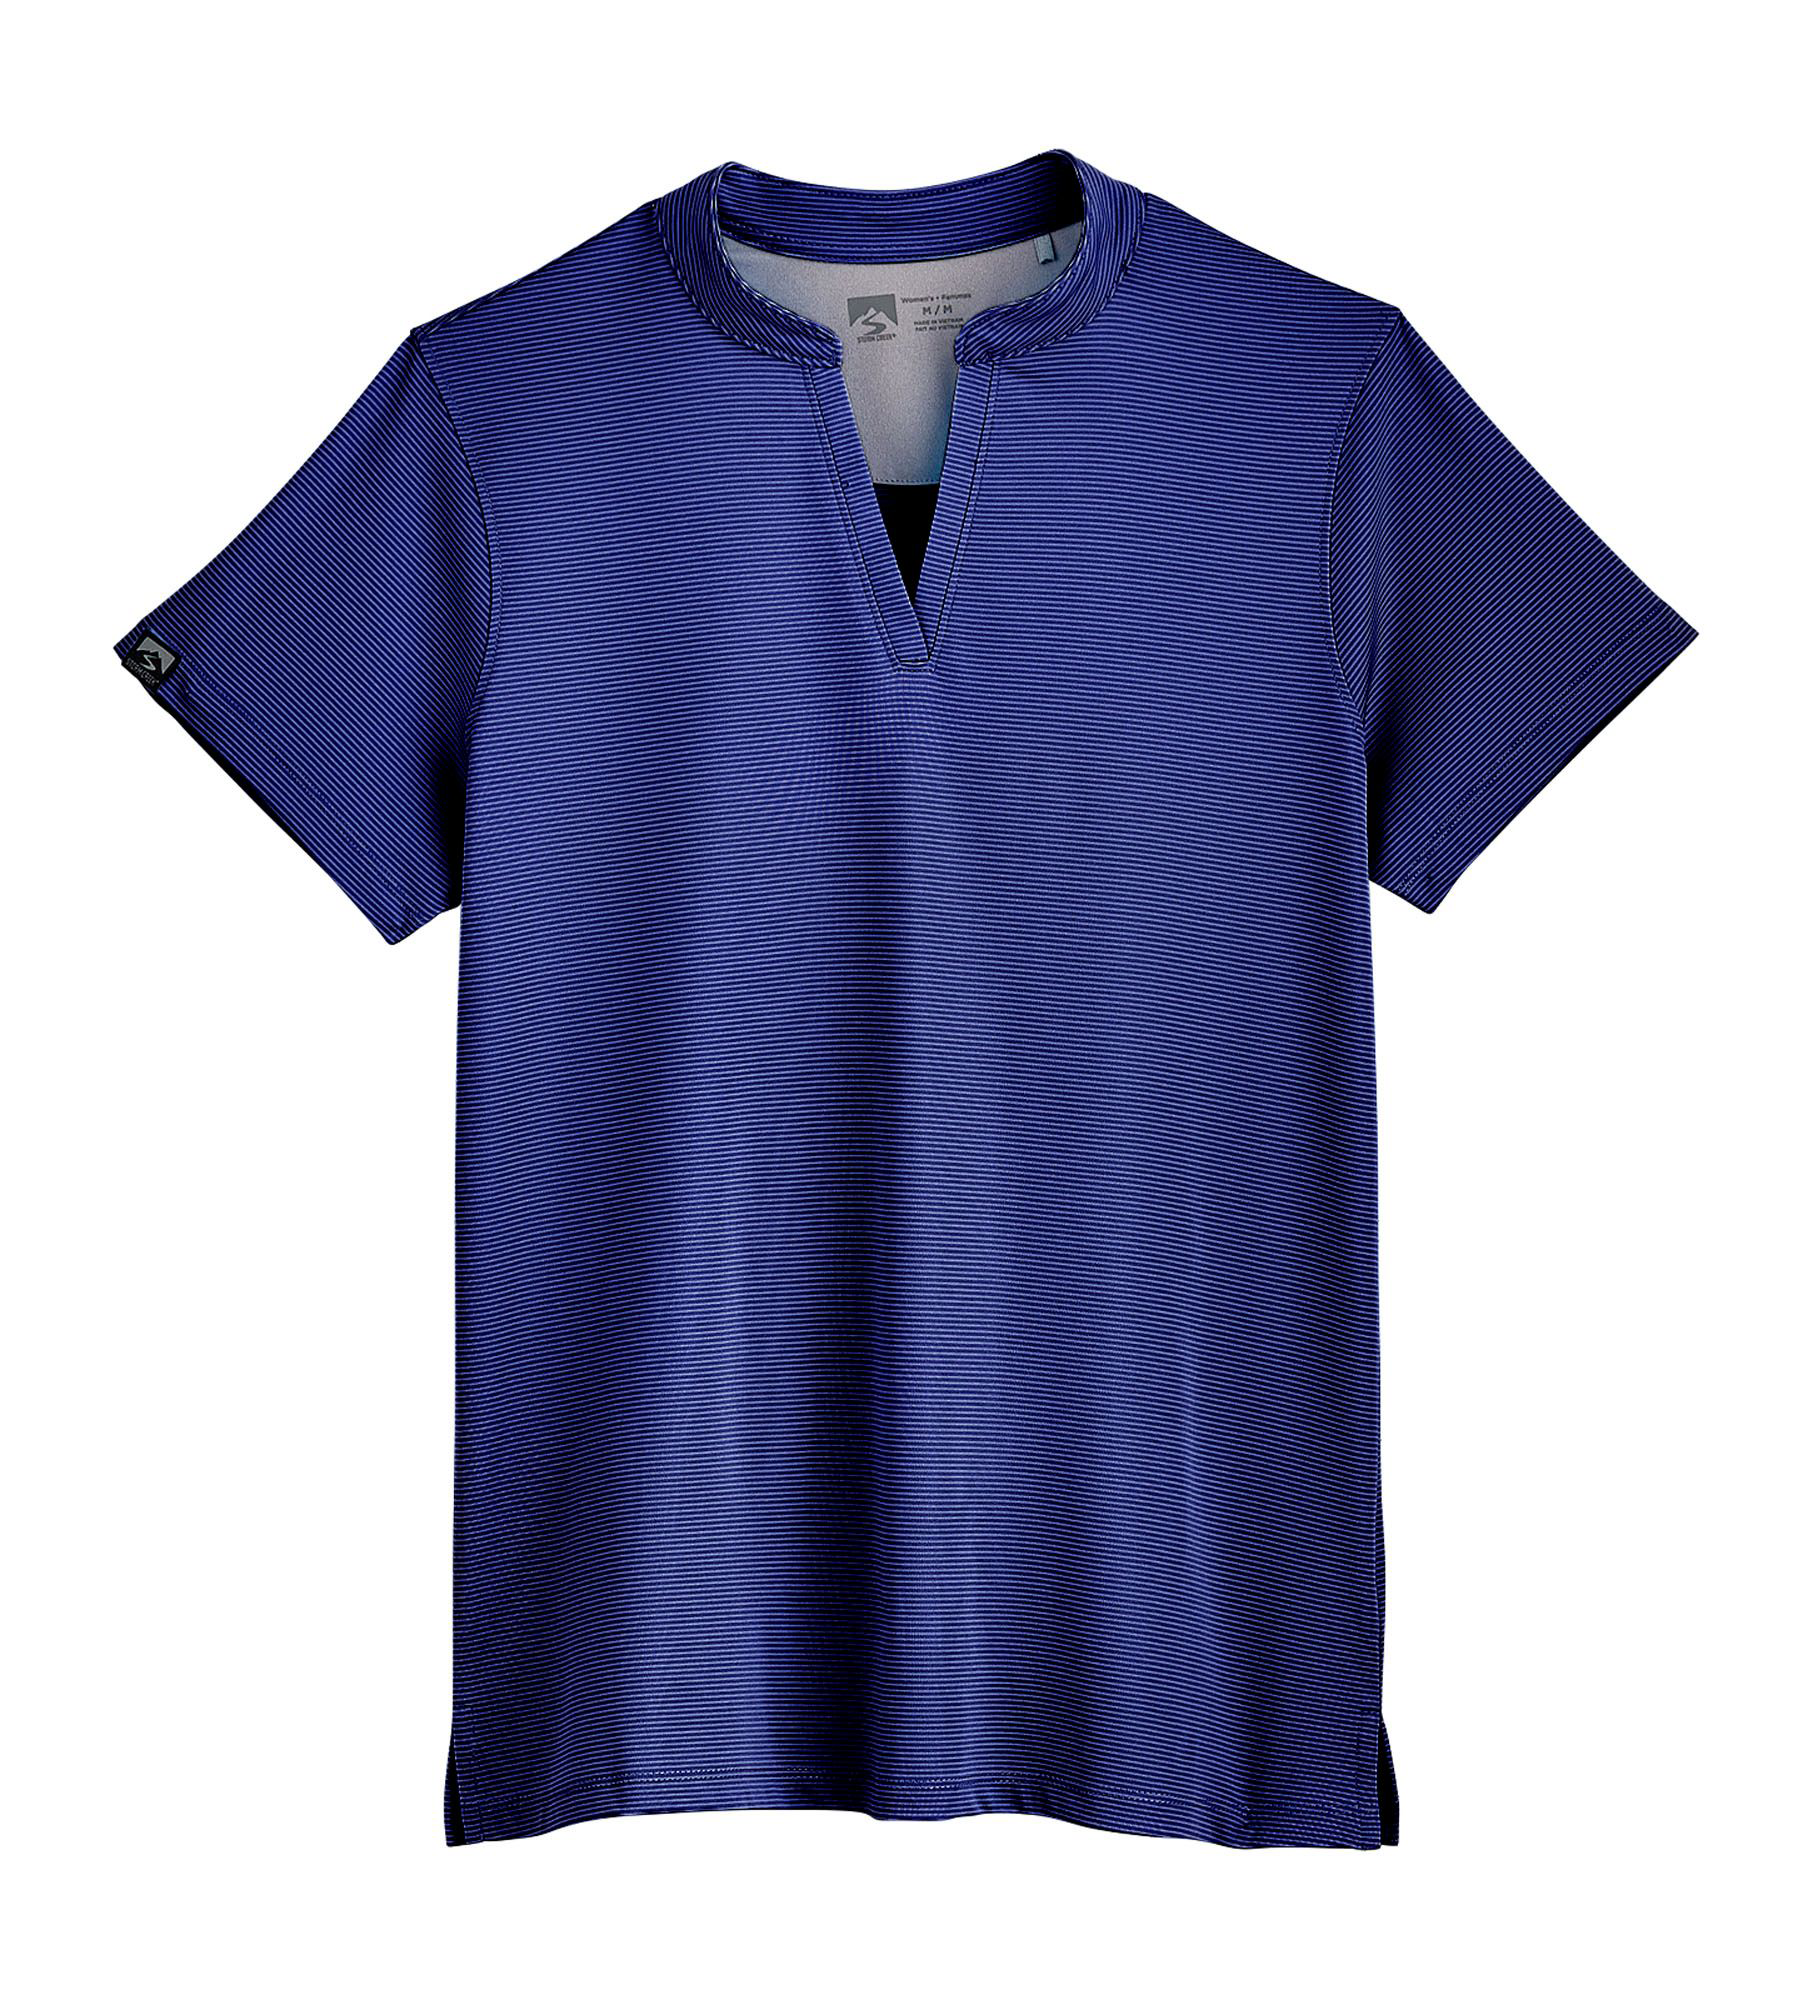 Storm Creek Optimist Short-Sleeve Polo Shirt for Ladies - Navy - XL